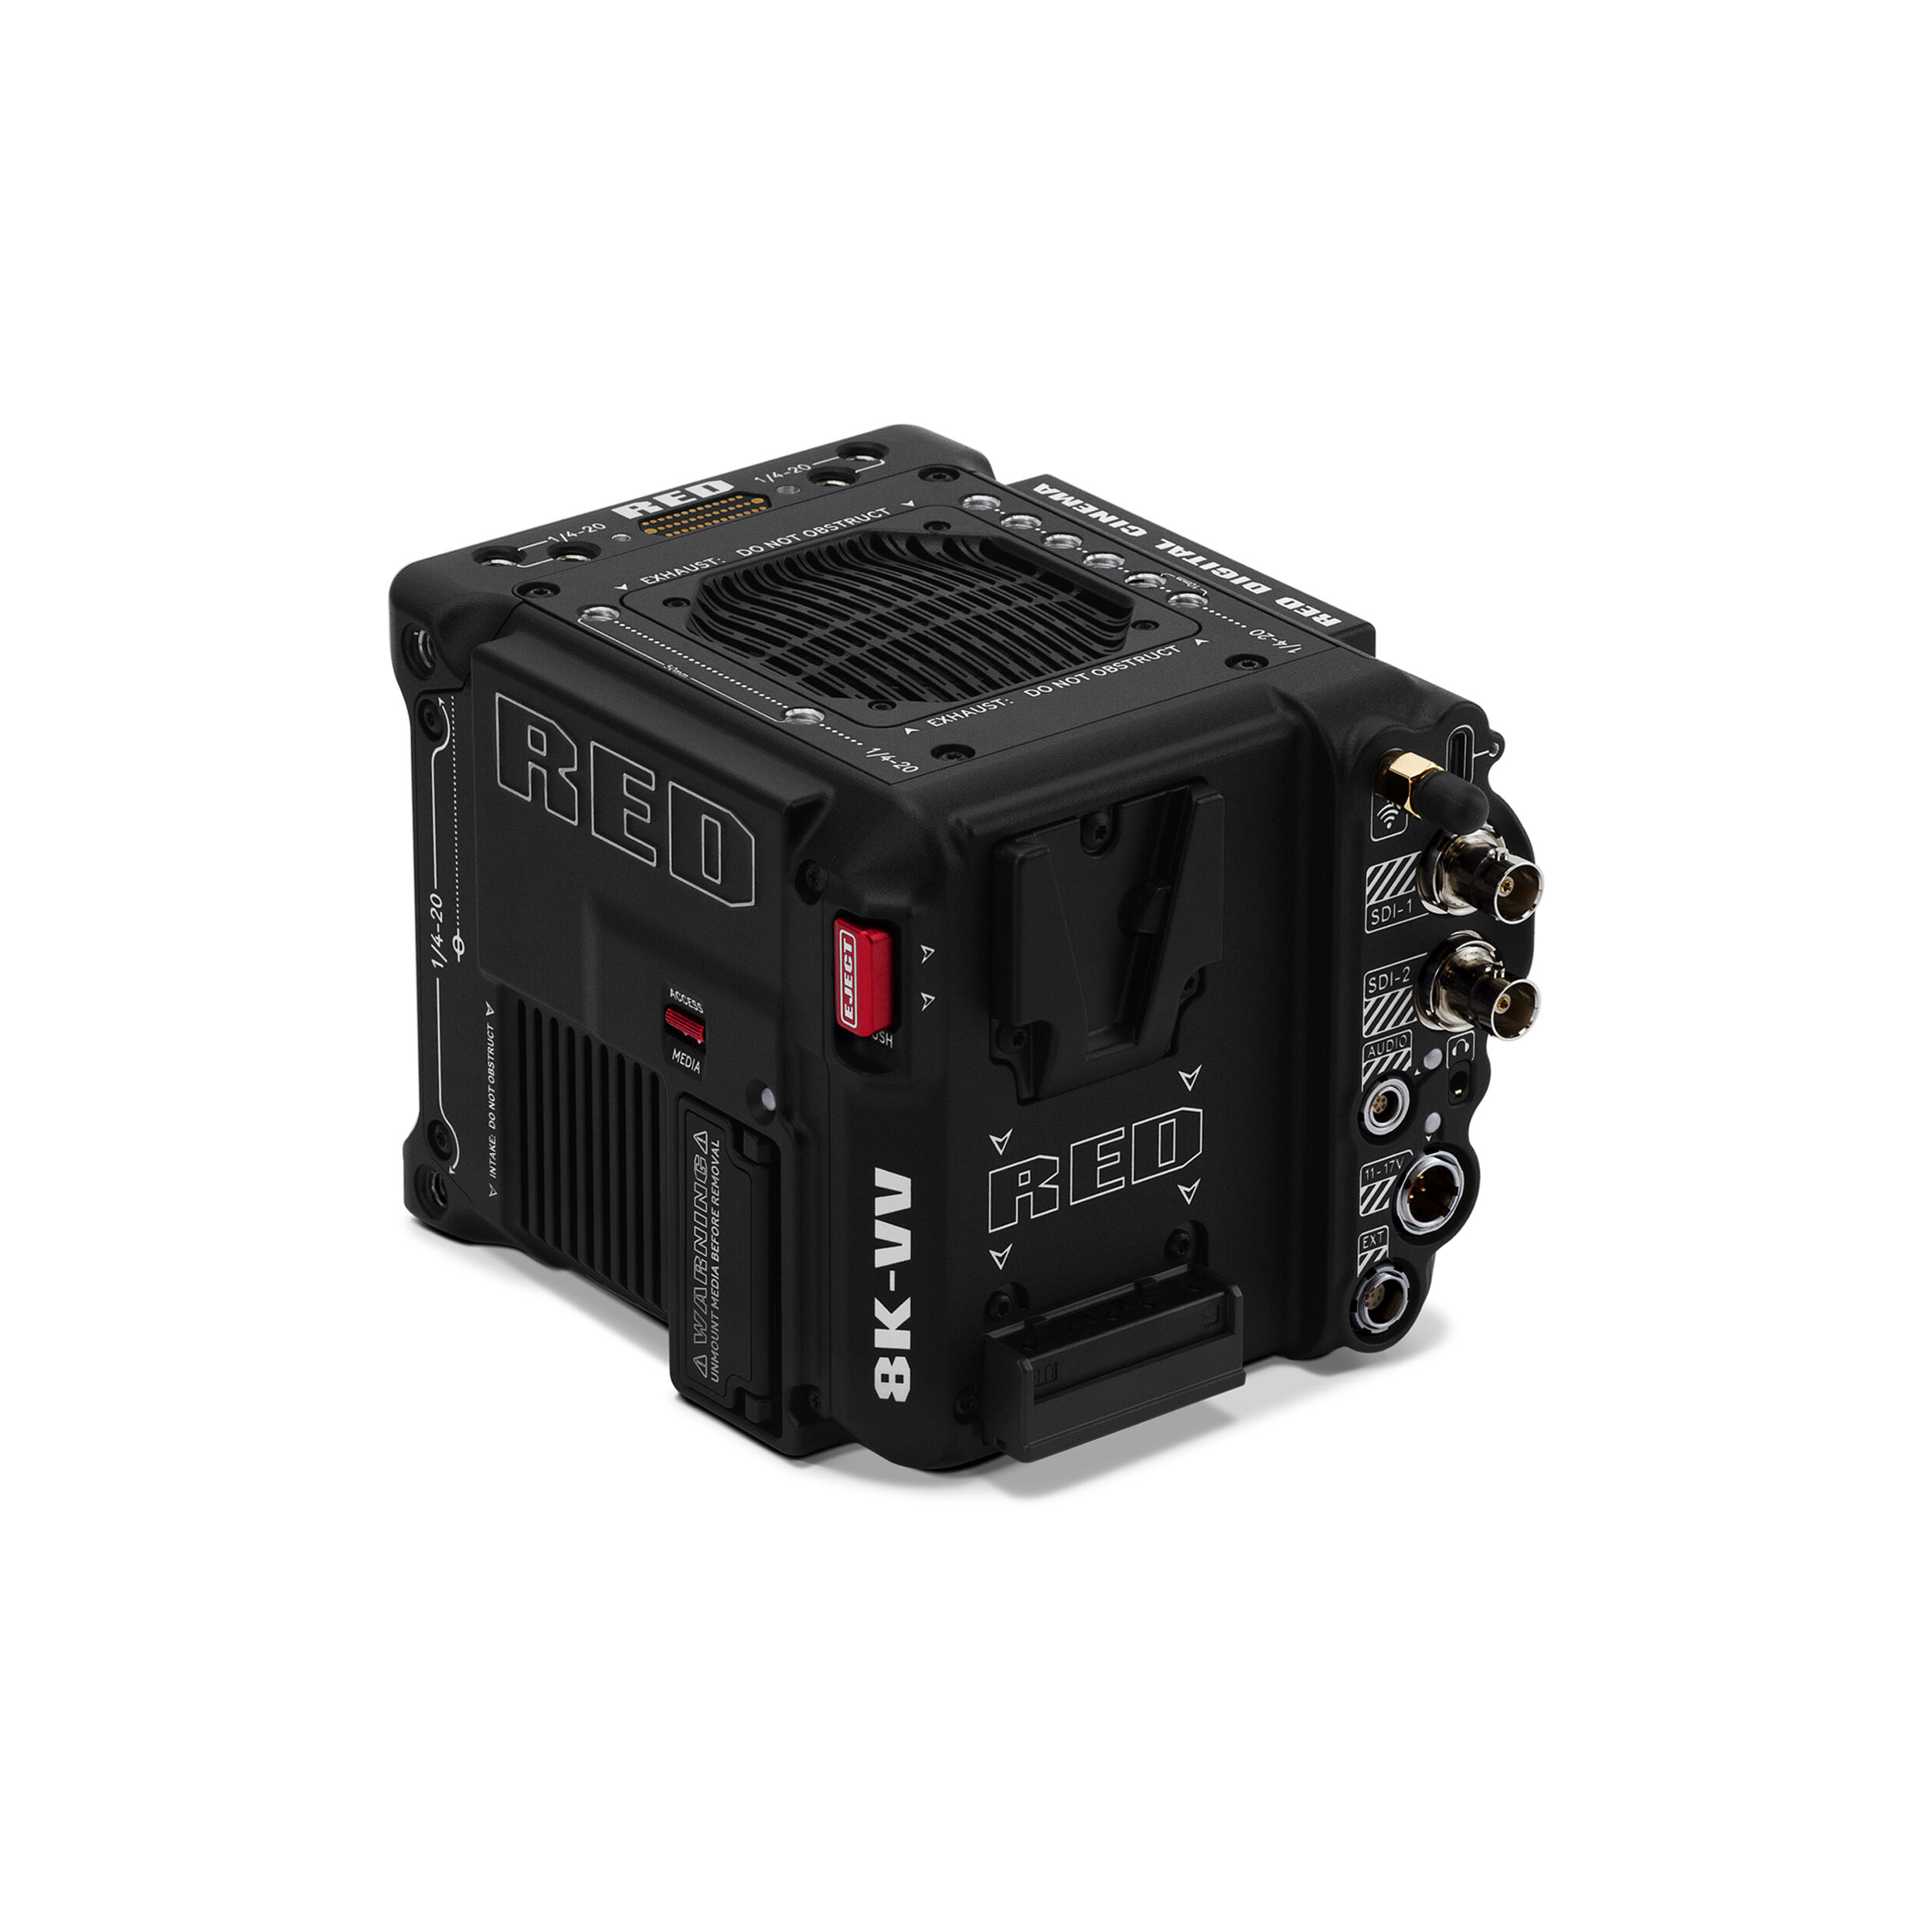 Red Digital Cinema V-Raptor 8K VV + 6K S35 Caméra DSMC3 à double format pour le support Canon RF